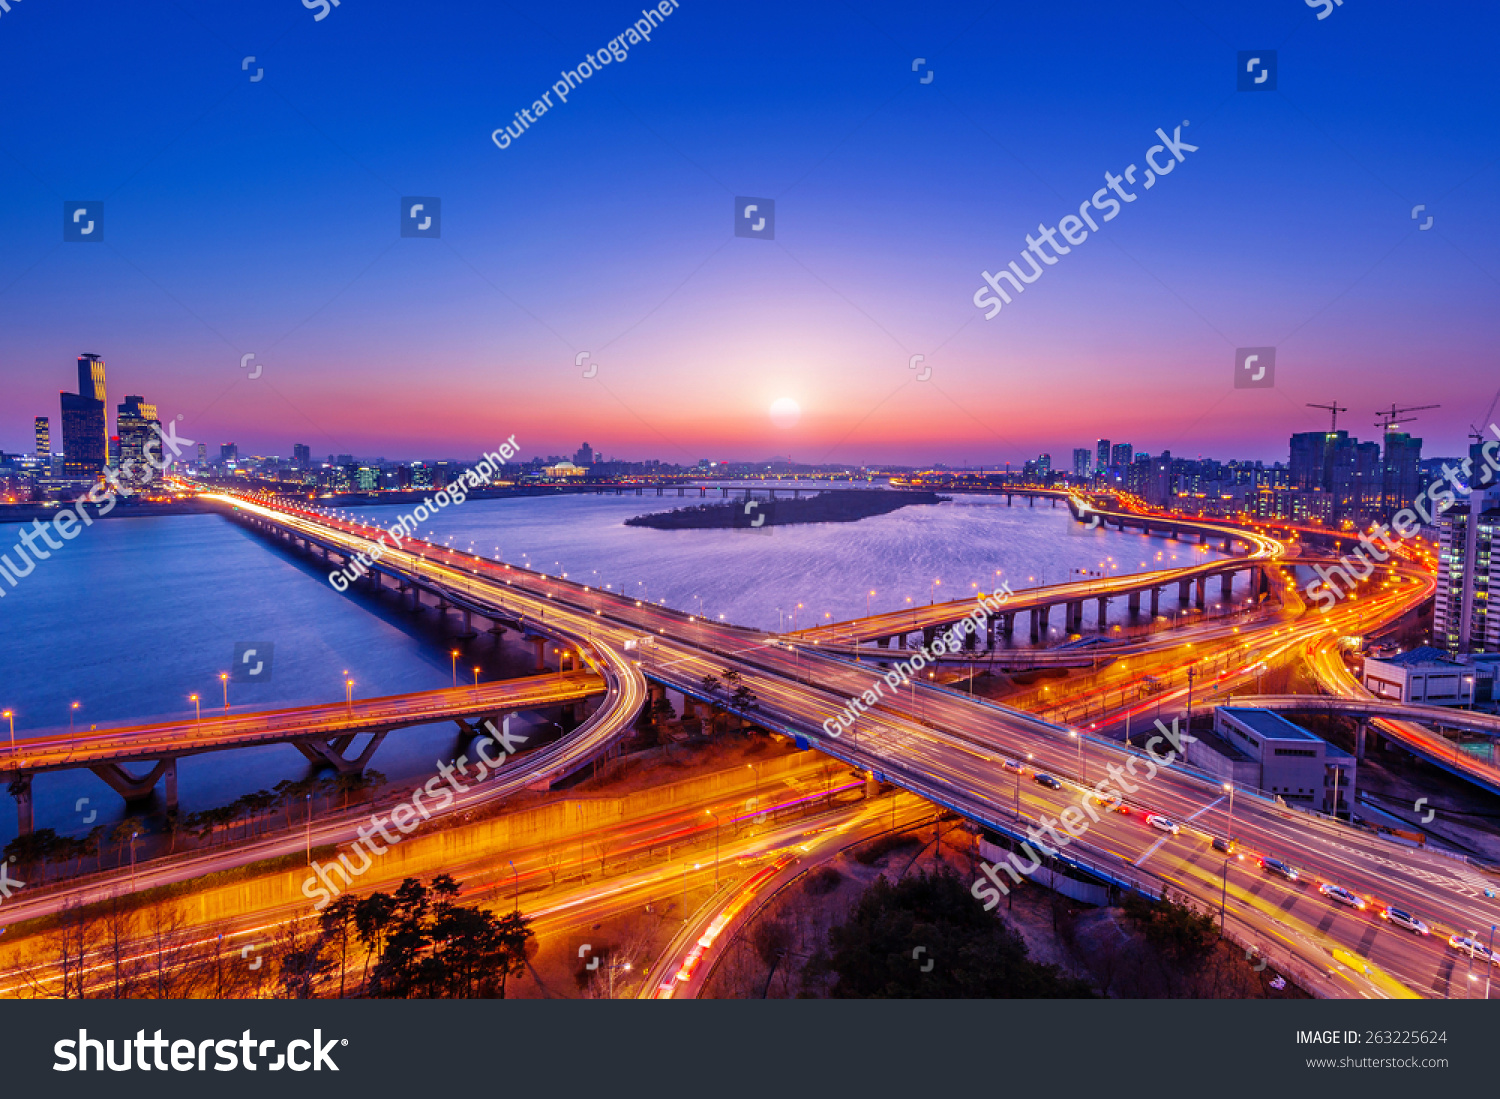 Mapo Bridge Seoul Cityscape Korea Stock Photo 263225624 - Shutterstock